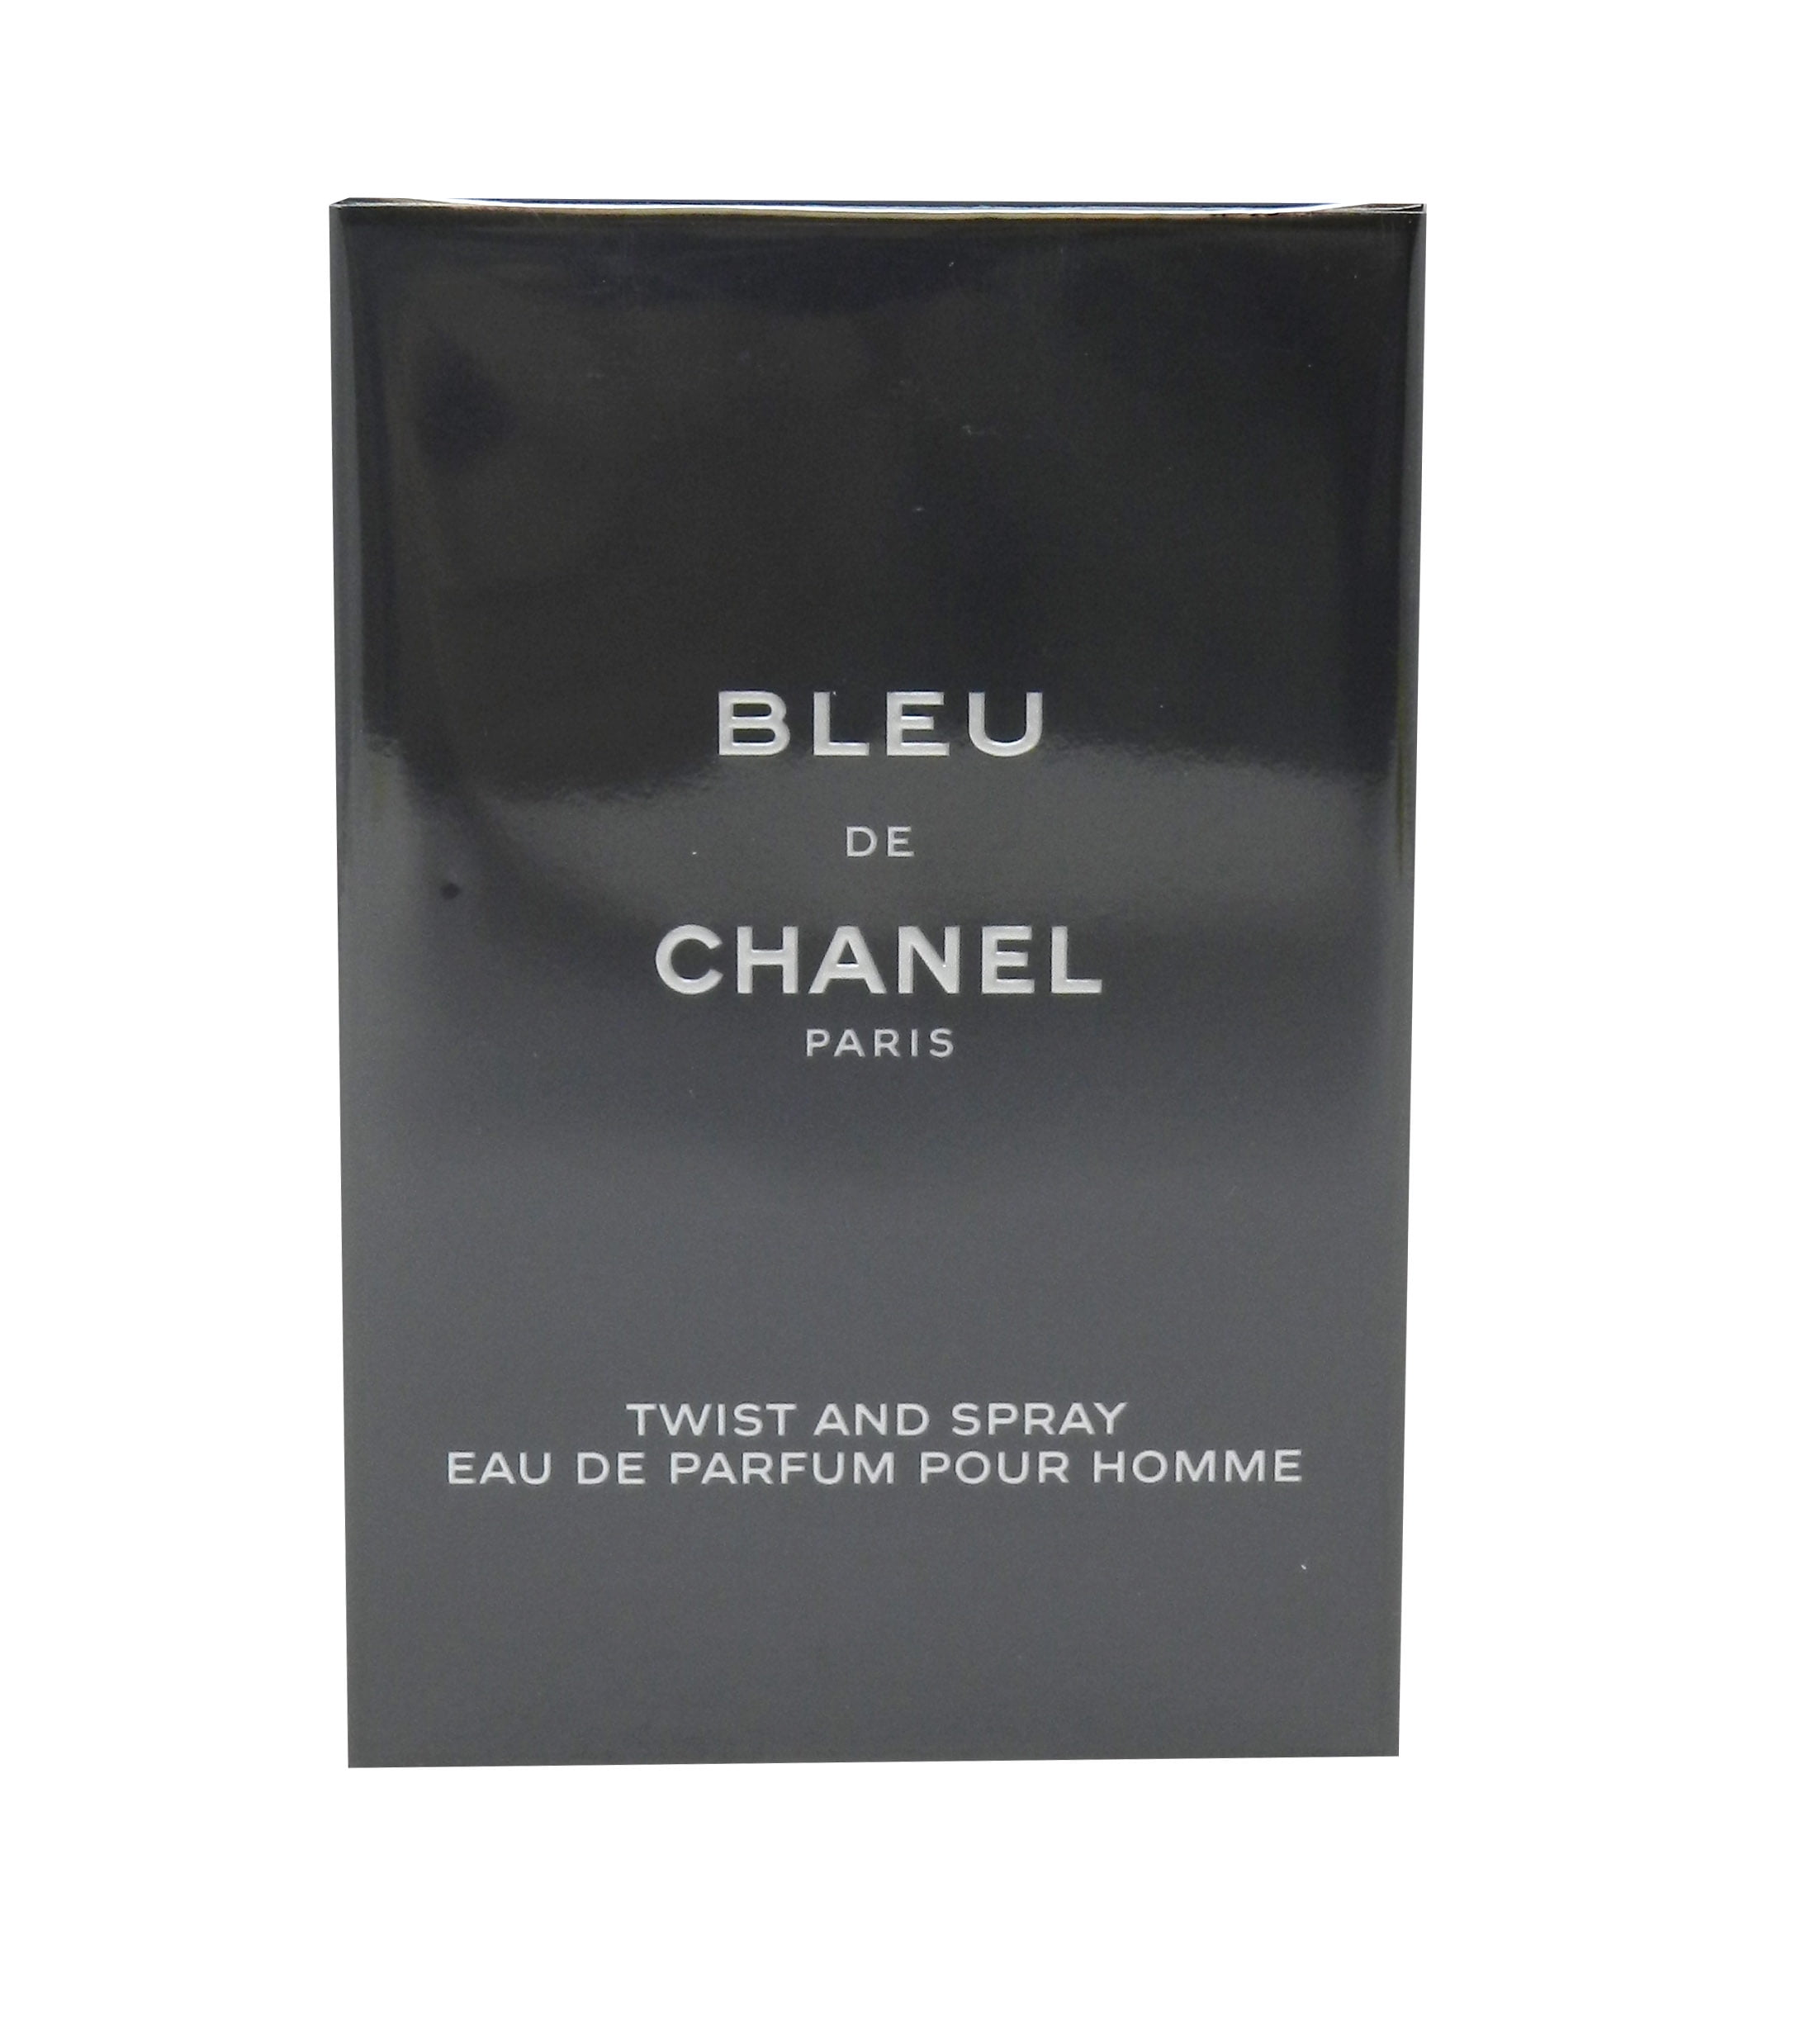 Chanel Bleu De Eau De Parfum Twist & Spray Travel Spray Refills 20ML Walmart.com